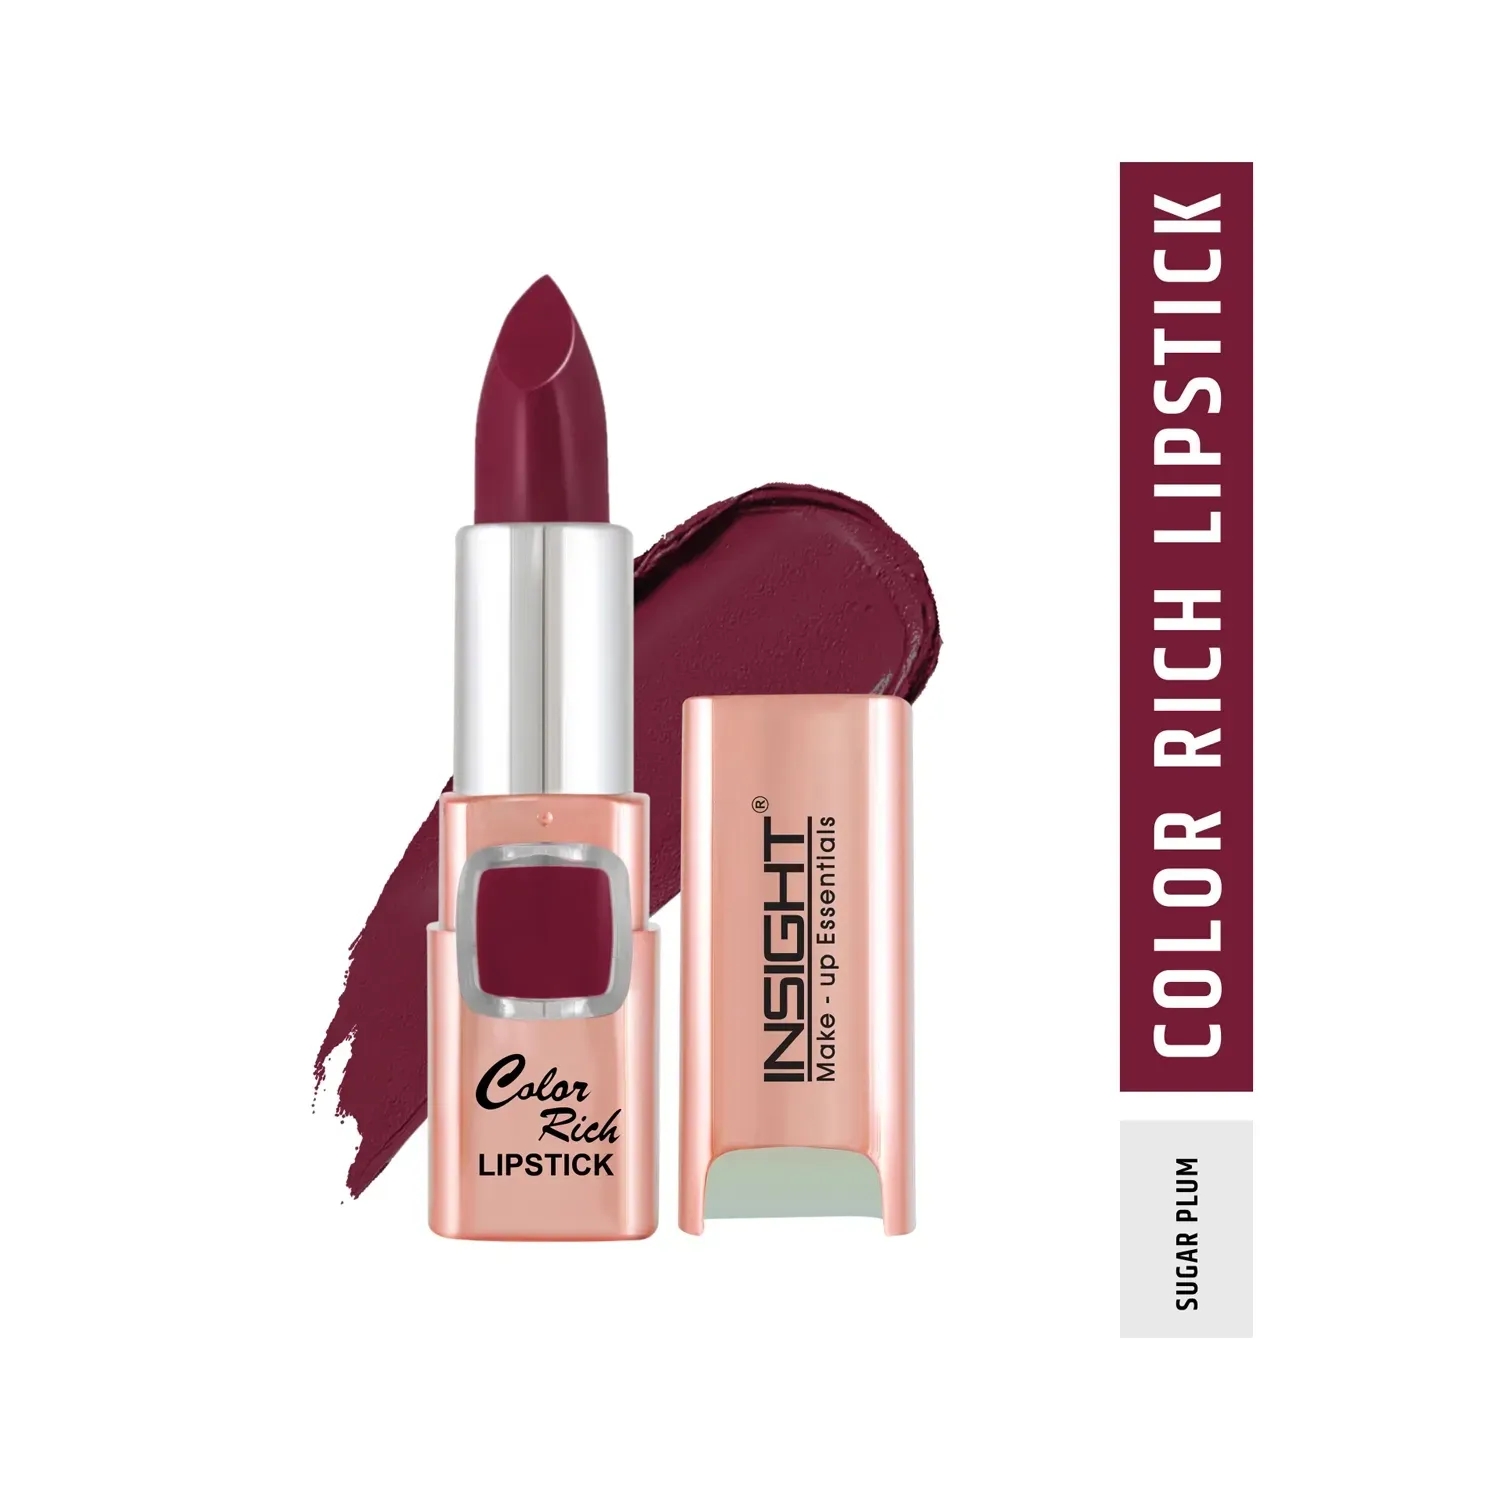 Insight Cosmetics | Insight Cosmetics Color Rich Lipstick - Sugur Plum (4.2g)